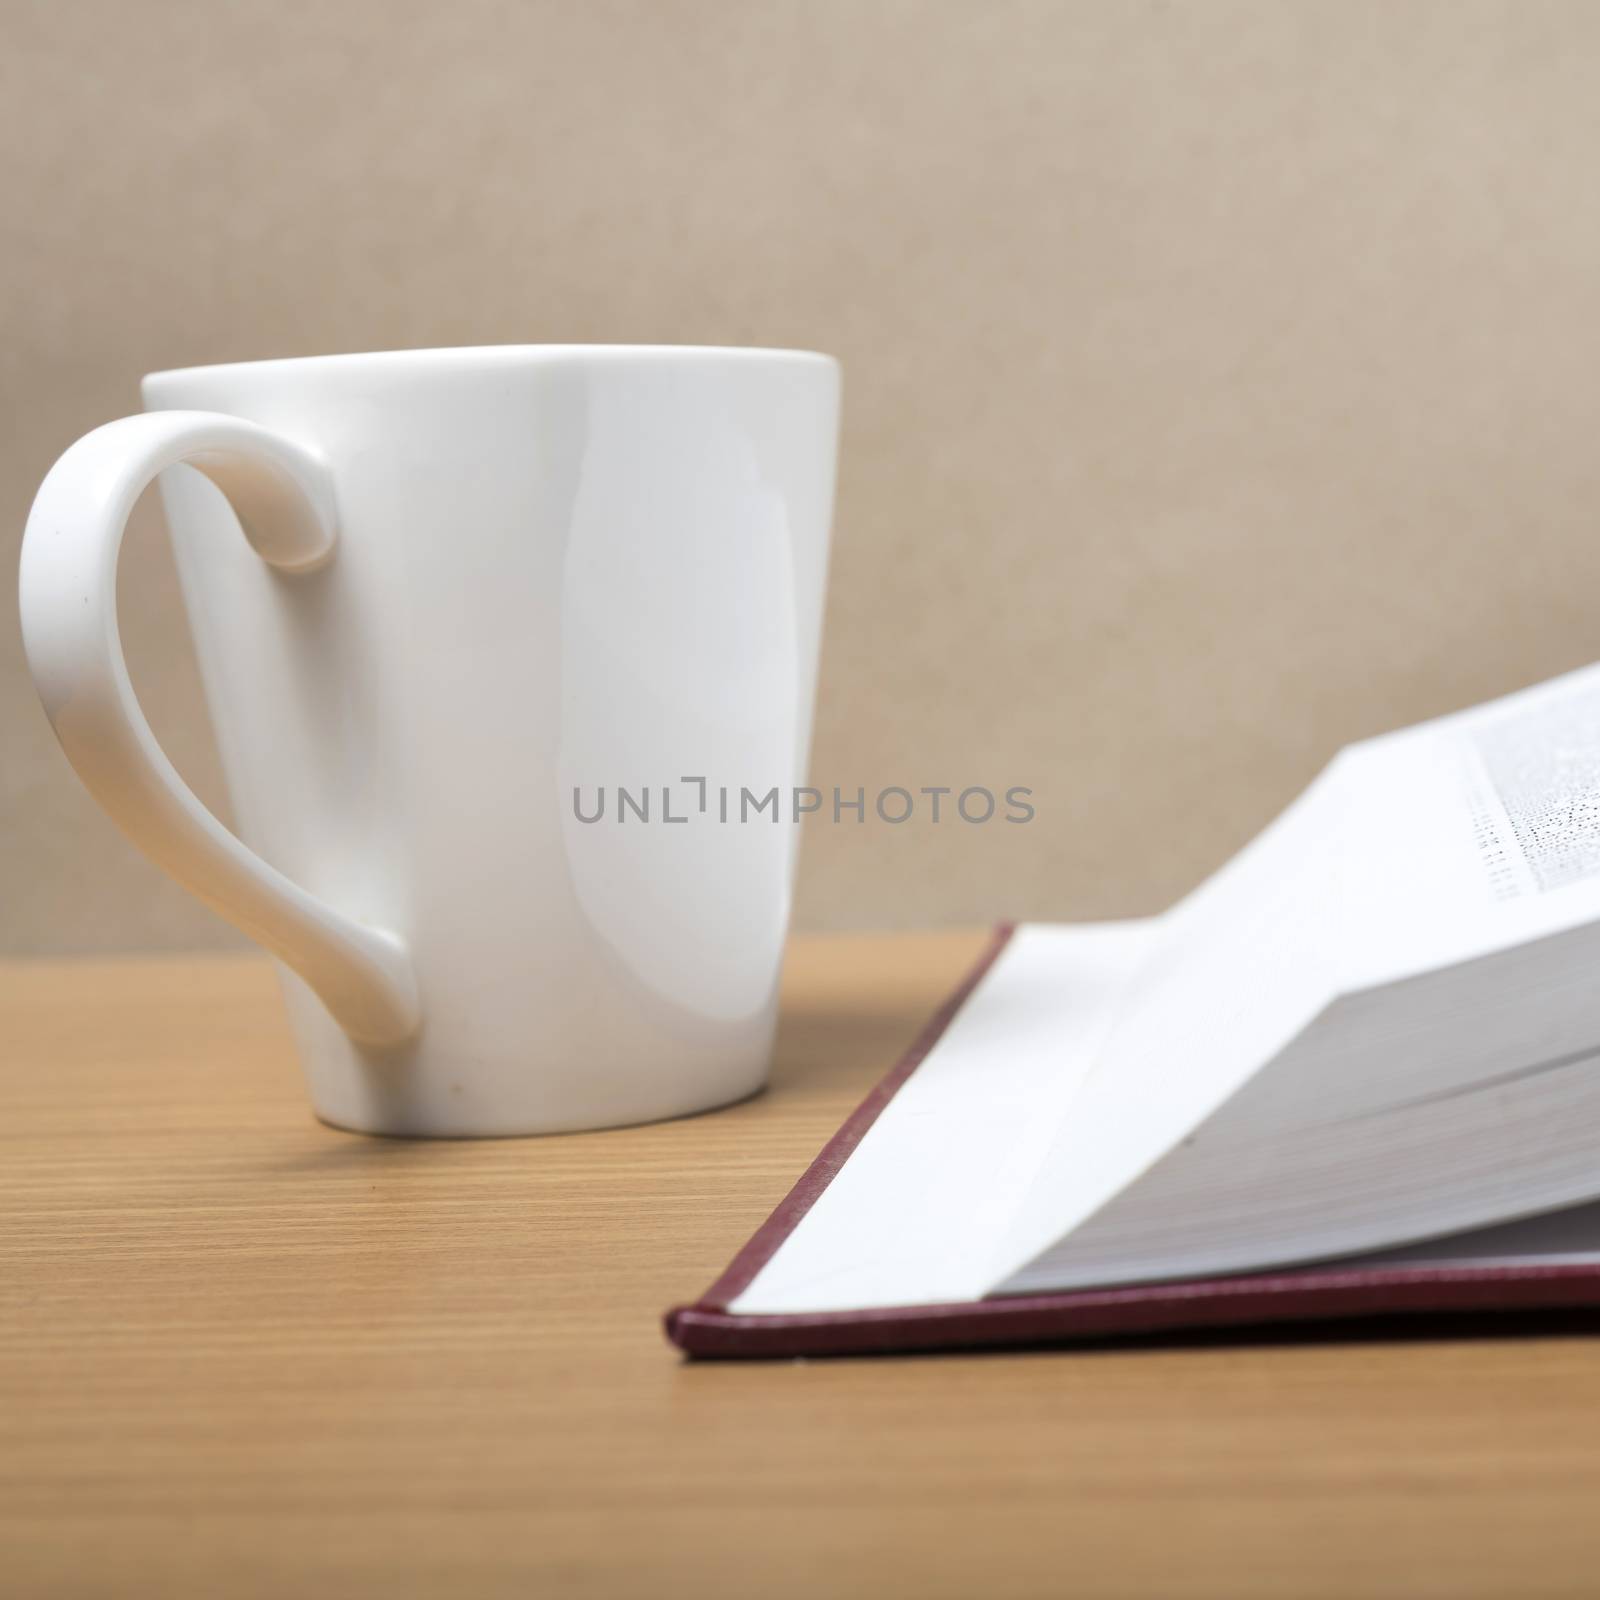 book and coffee mug on wood background